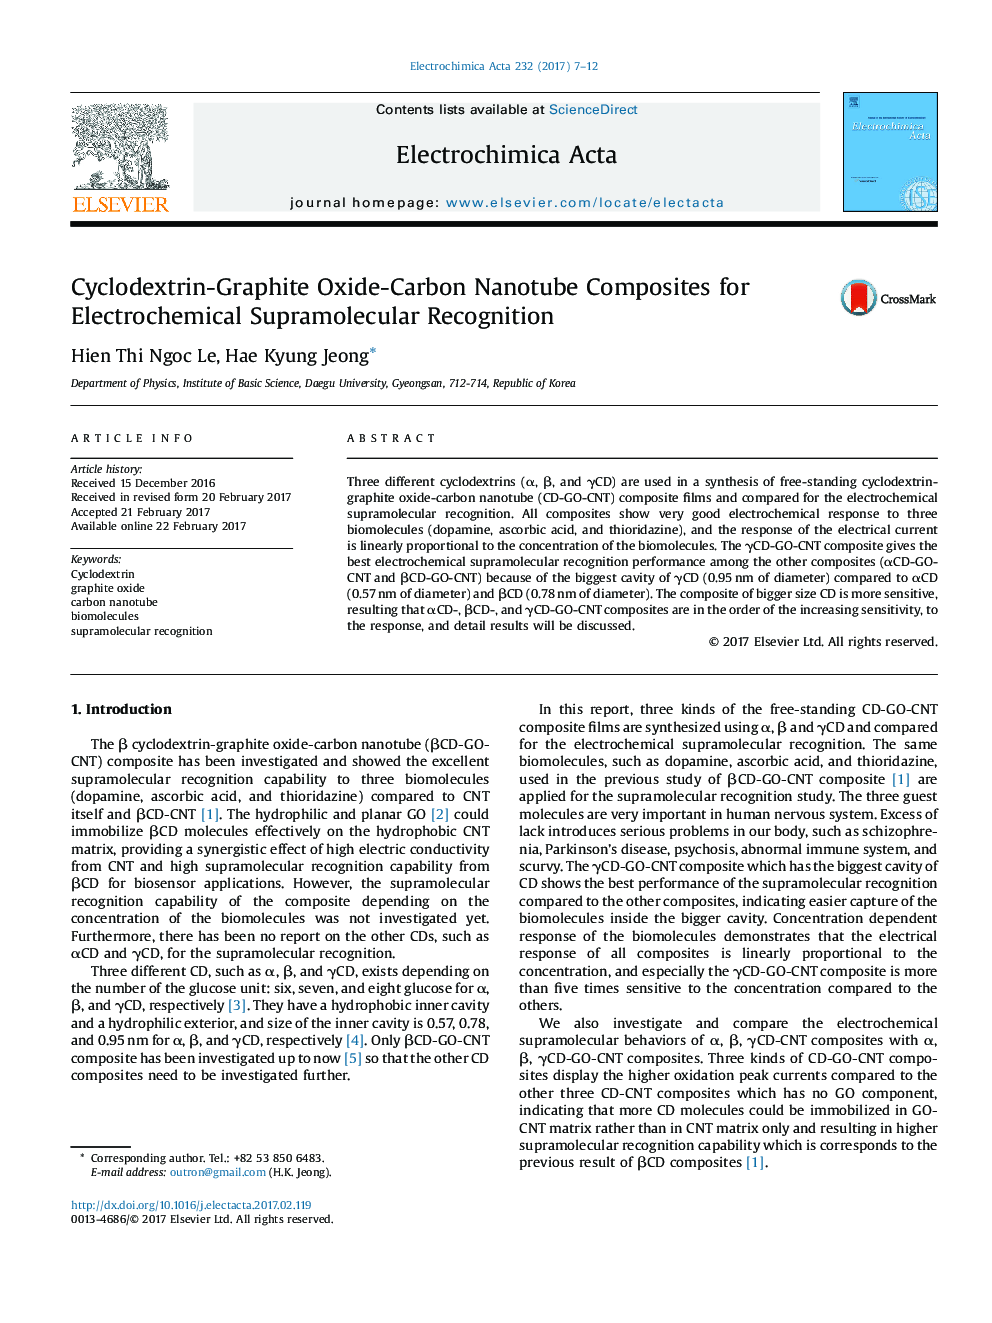 Cyclodextrin-Graphite Oxide-Carbon Nanotube Composites for Electrochemical Supramolecular Recognition